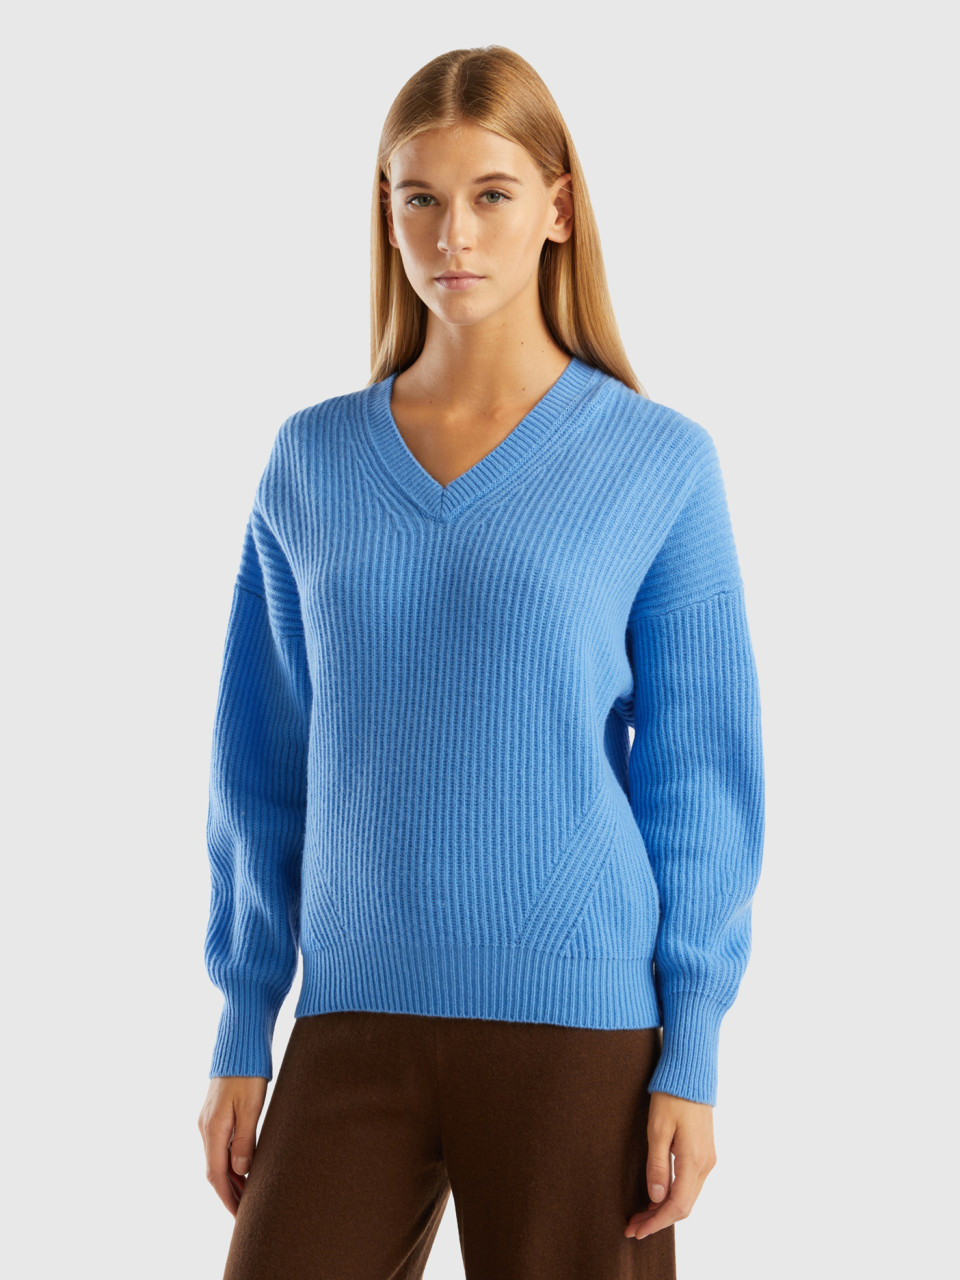 Benetton, Soft Sweater With V-neck, Light Blue, Women